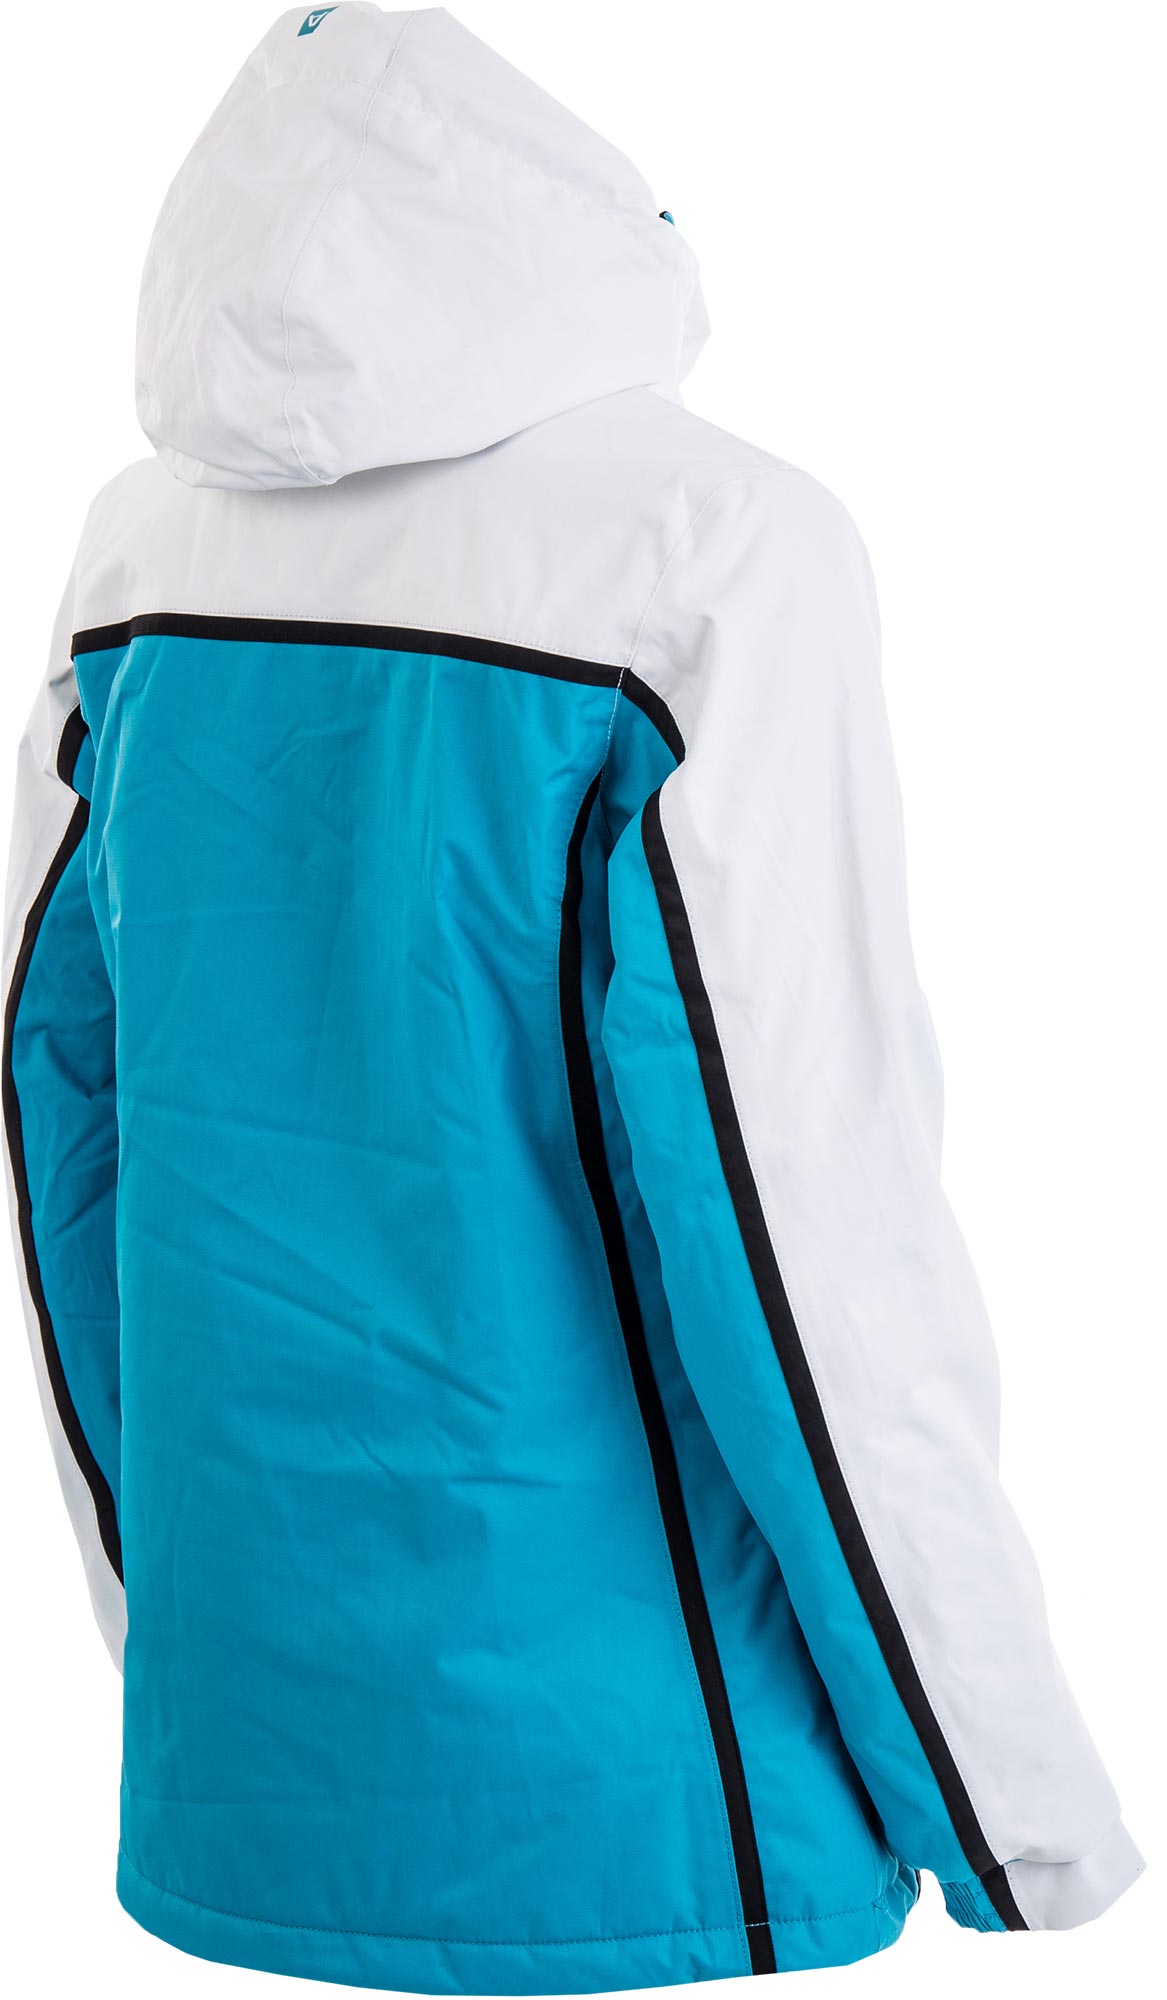 CORNING - Women's Ski Jacket